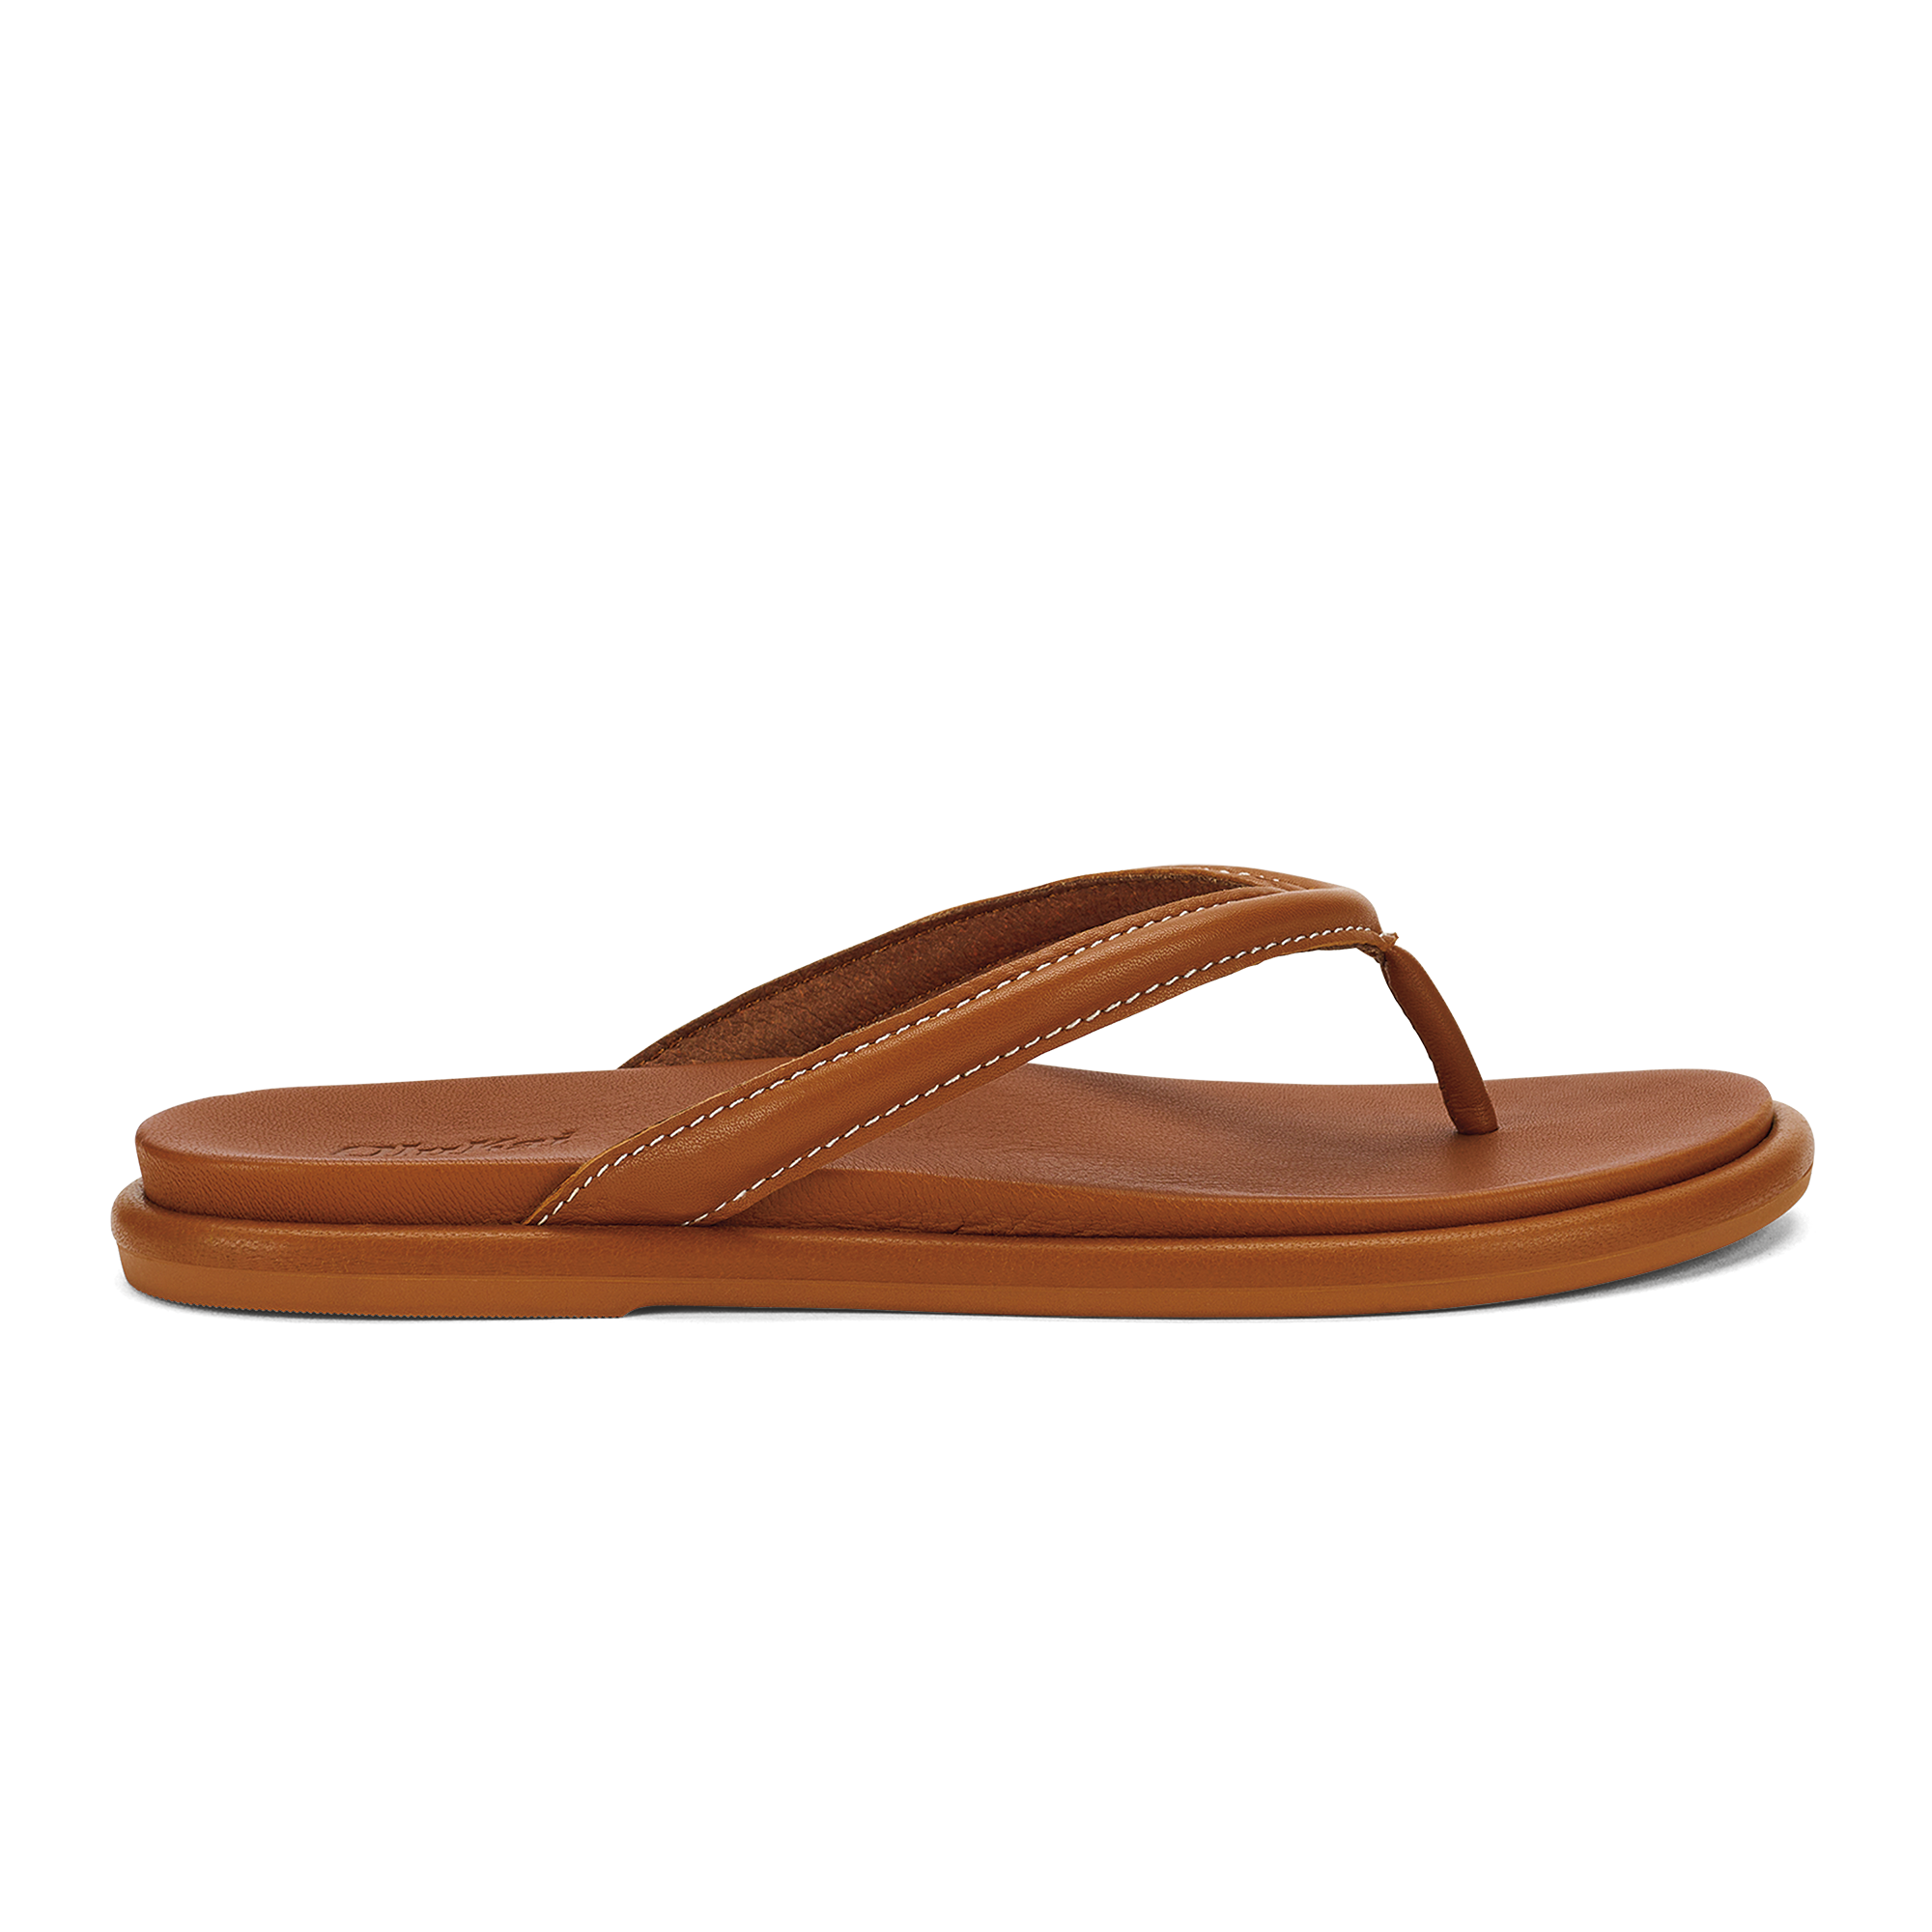  OLUKAI Paniolo Women's Beach Sandals, Distressed Full-Grain  Leather Flip-Flop Slides, Wet Grip Soles, Compression Molded Footbed,  Bronze/Dk Java, 5